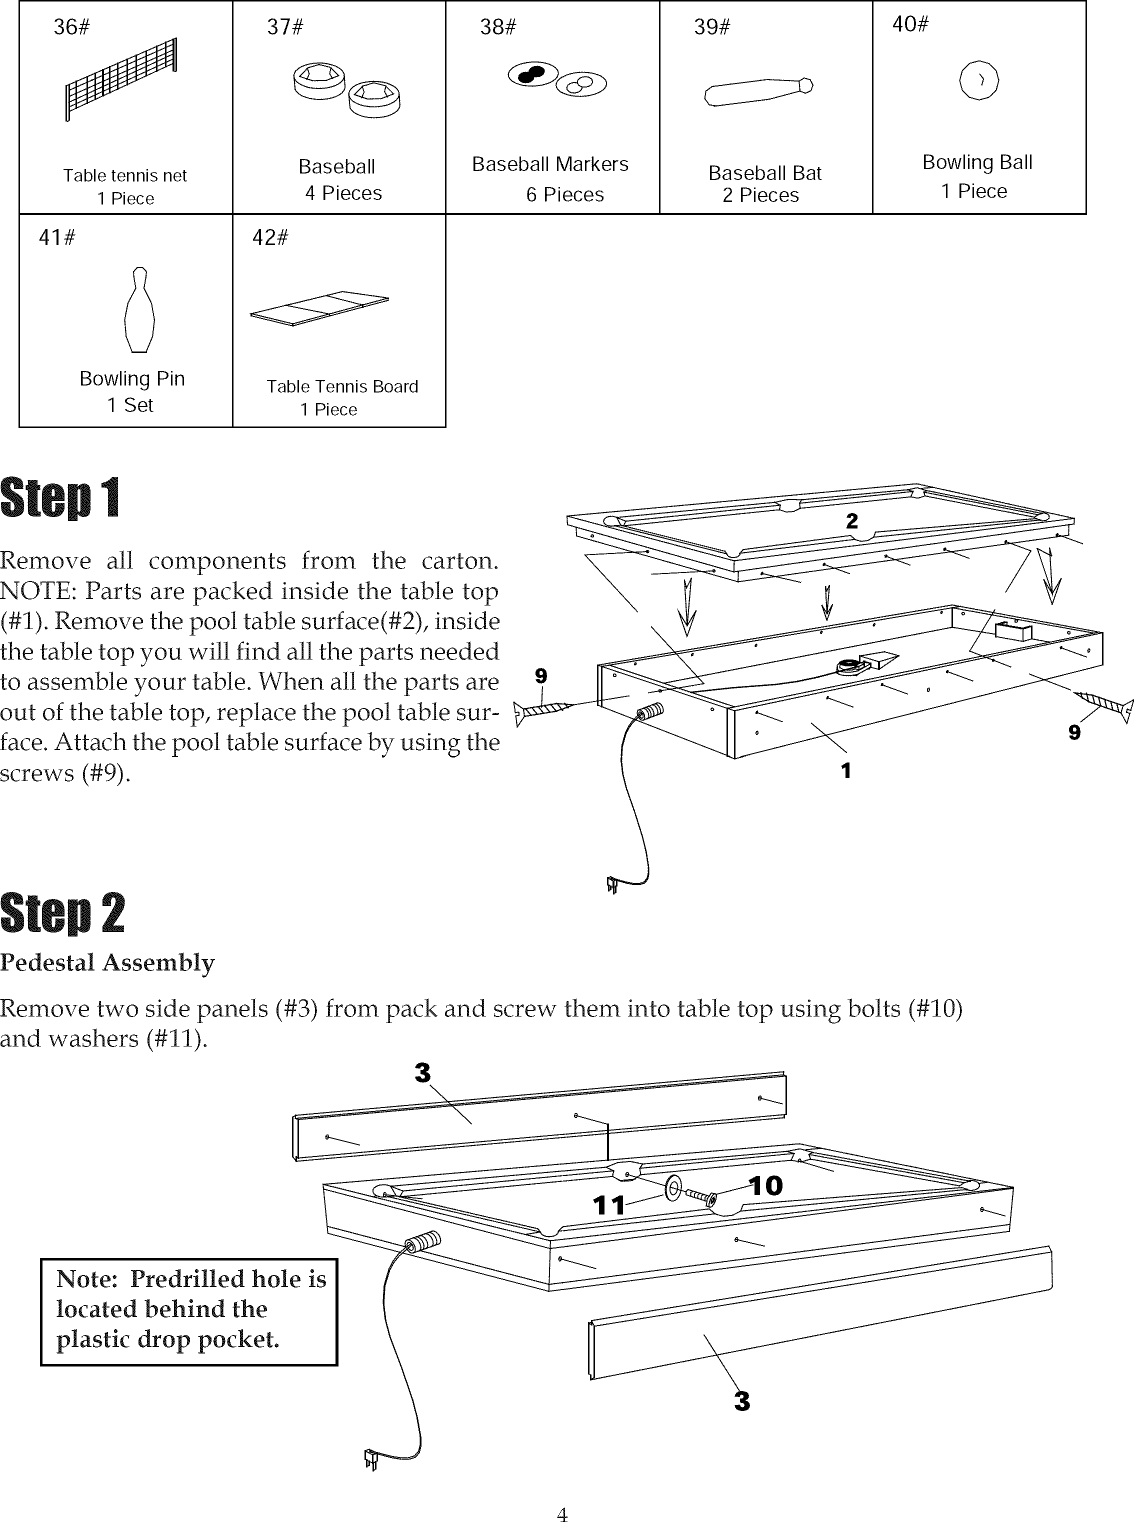 Page 4 of 11 - TRIUMPH  Rebound Table Manual L0912357